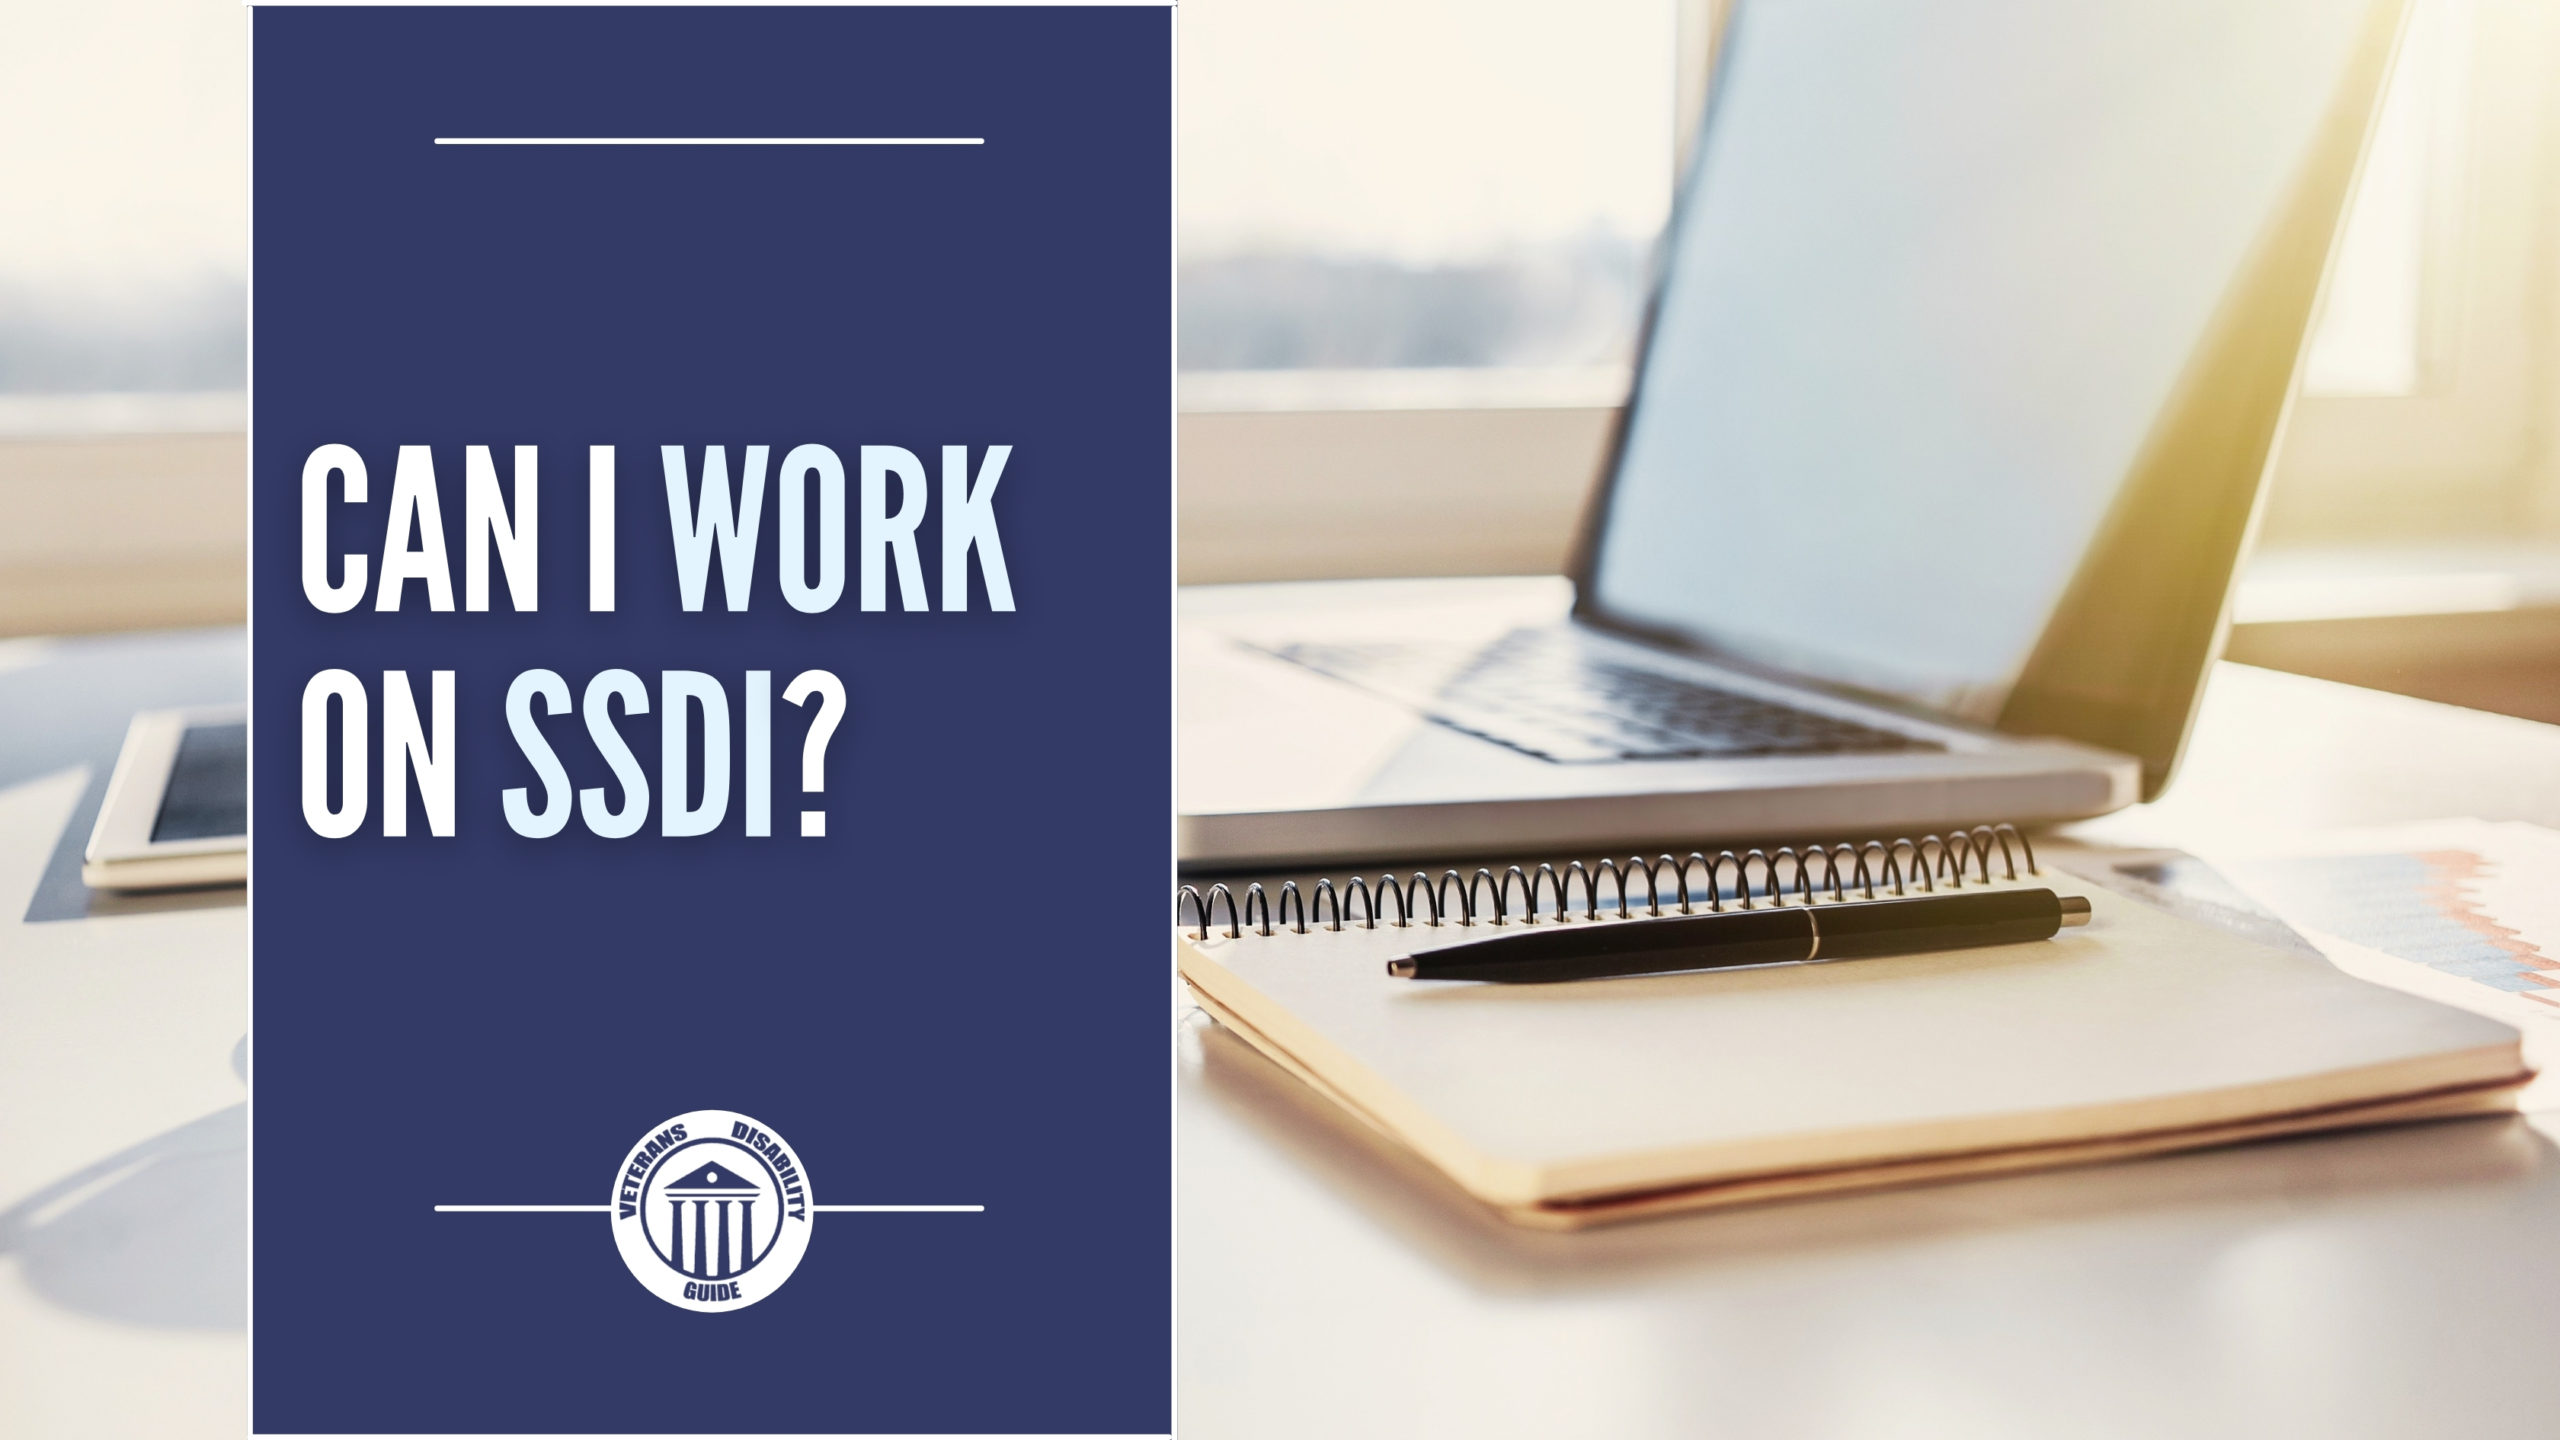 Can I work on SSDI Blog header